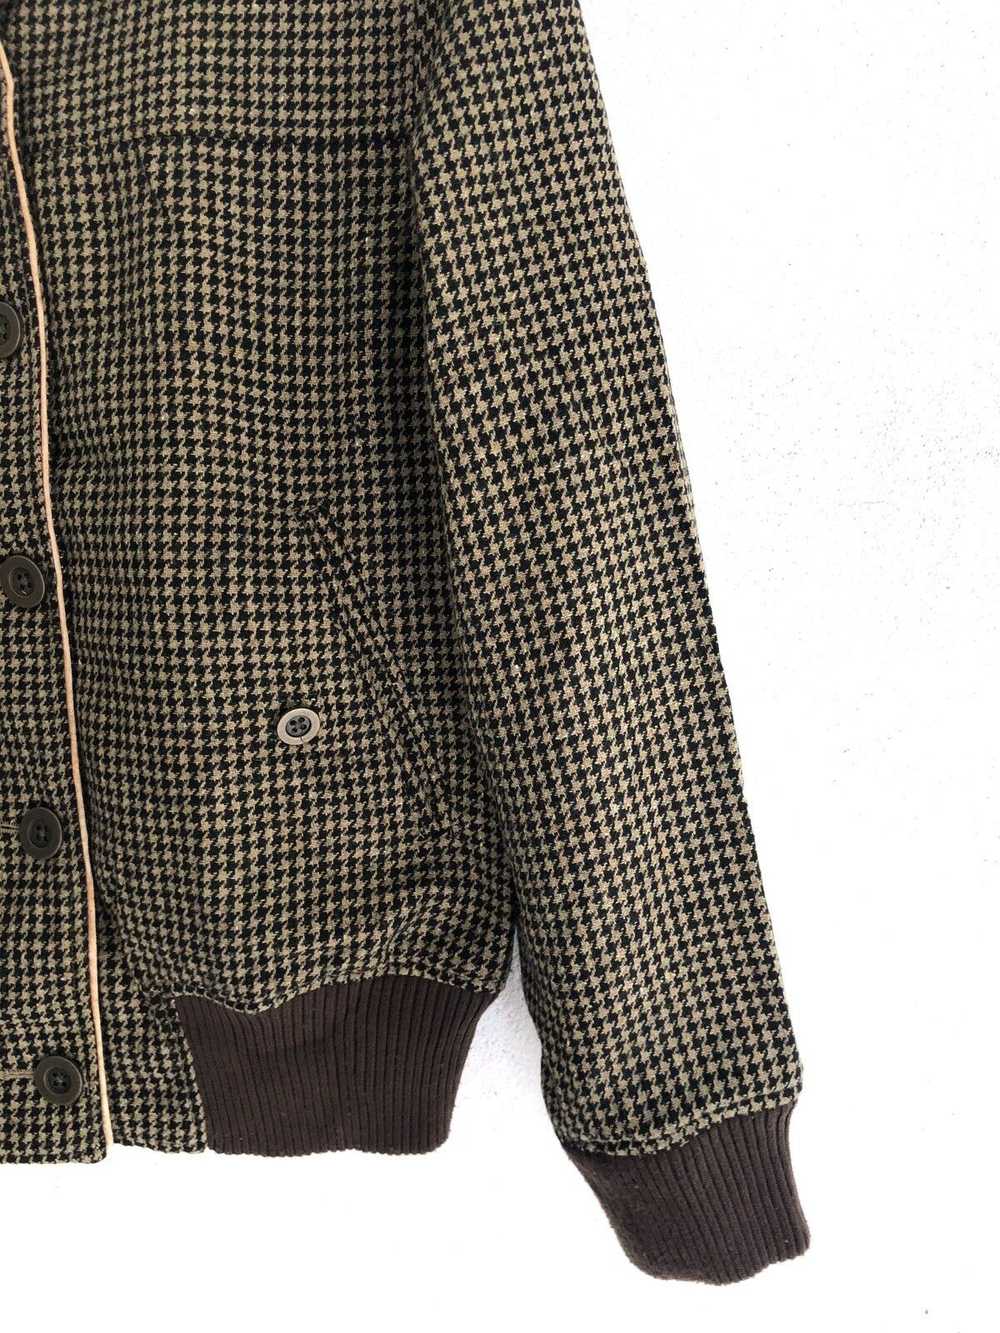 Japanese Brand final decision jacket - image 6